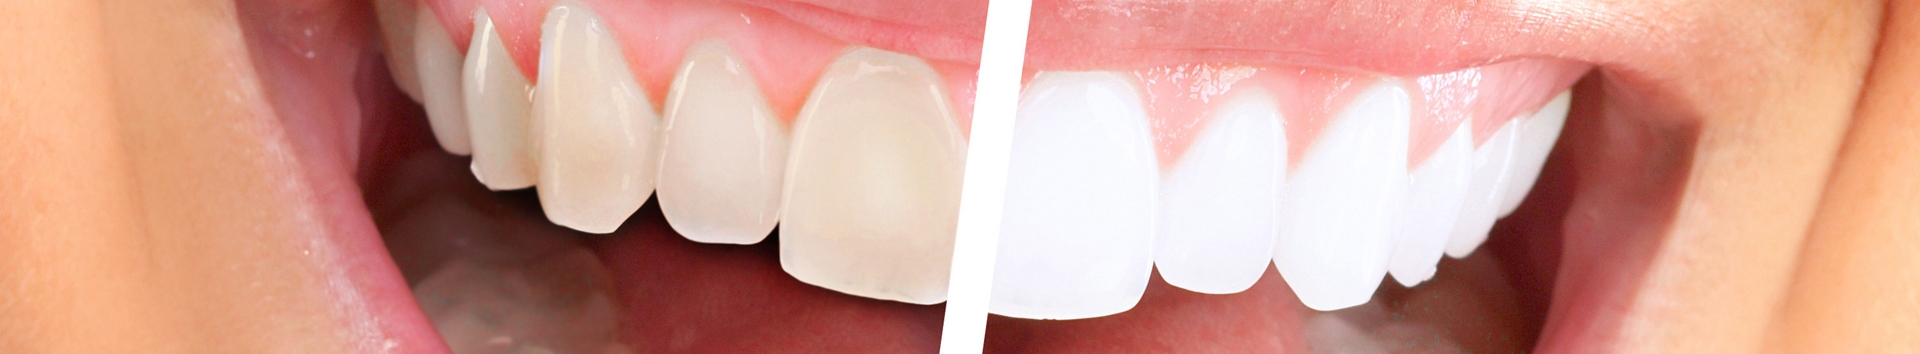 Como conservar o efeito do clareamento dental?